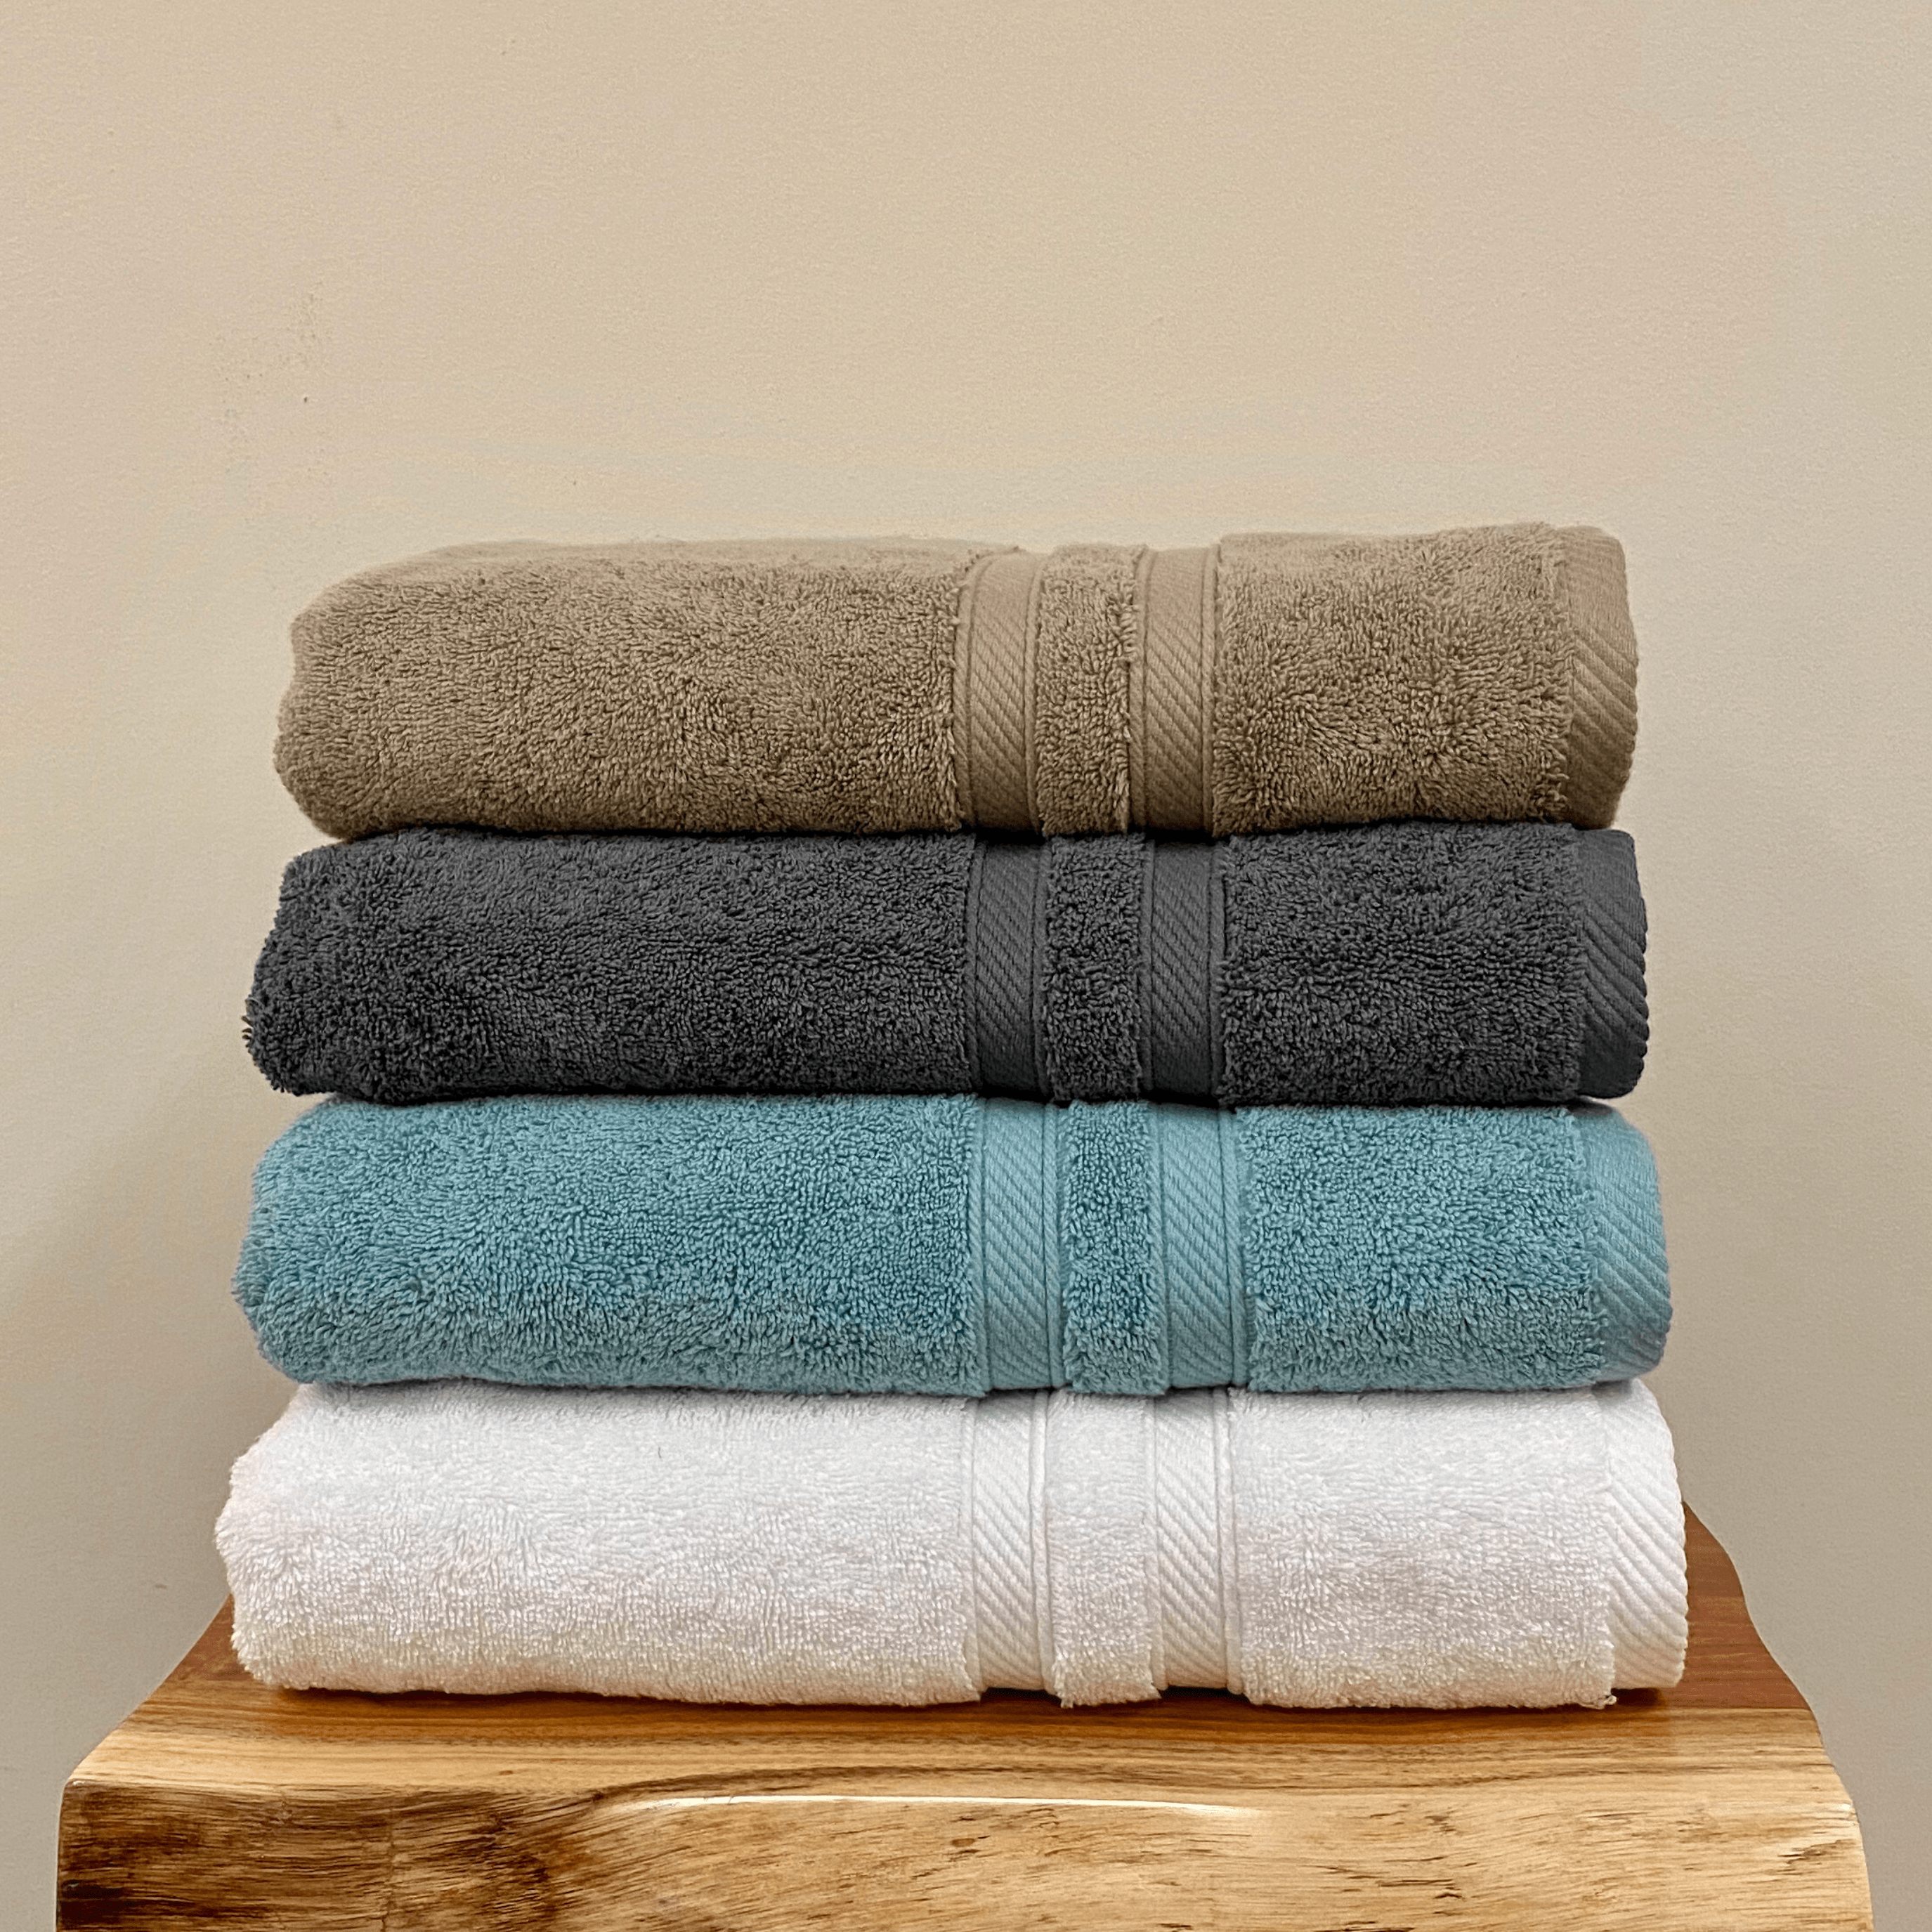 Skylark+Owl Towel Sets: The Turkish Towels Canada Loves – Skylark+